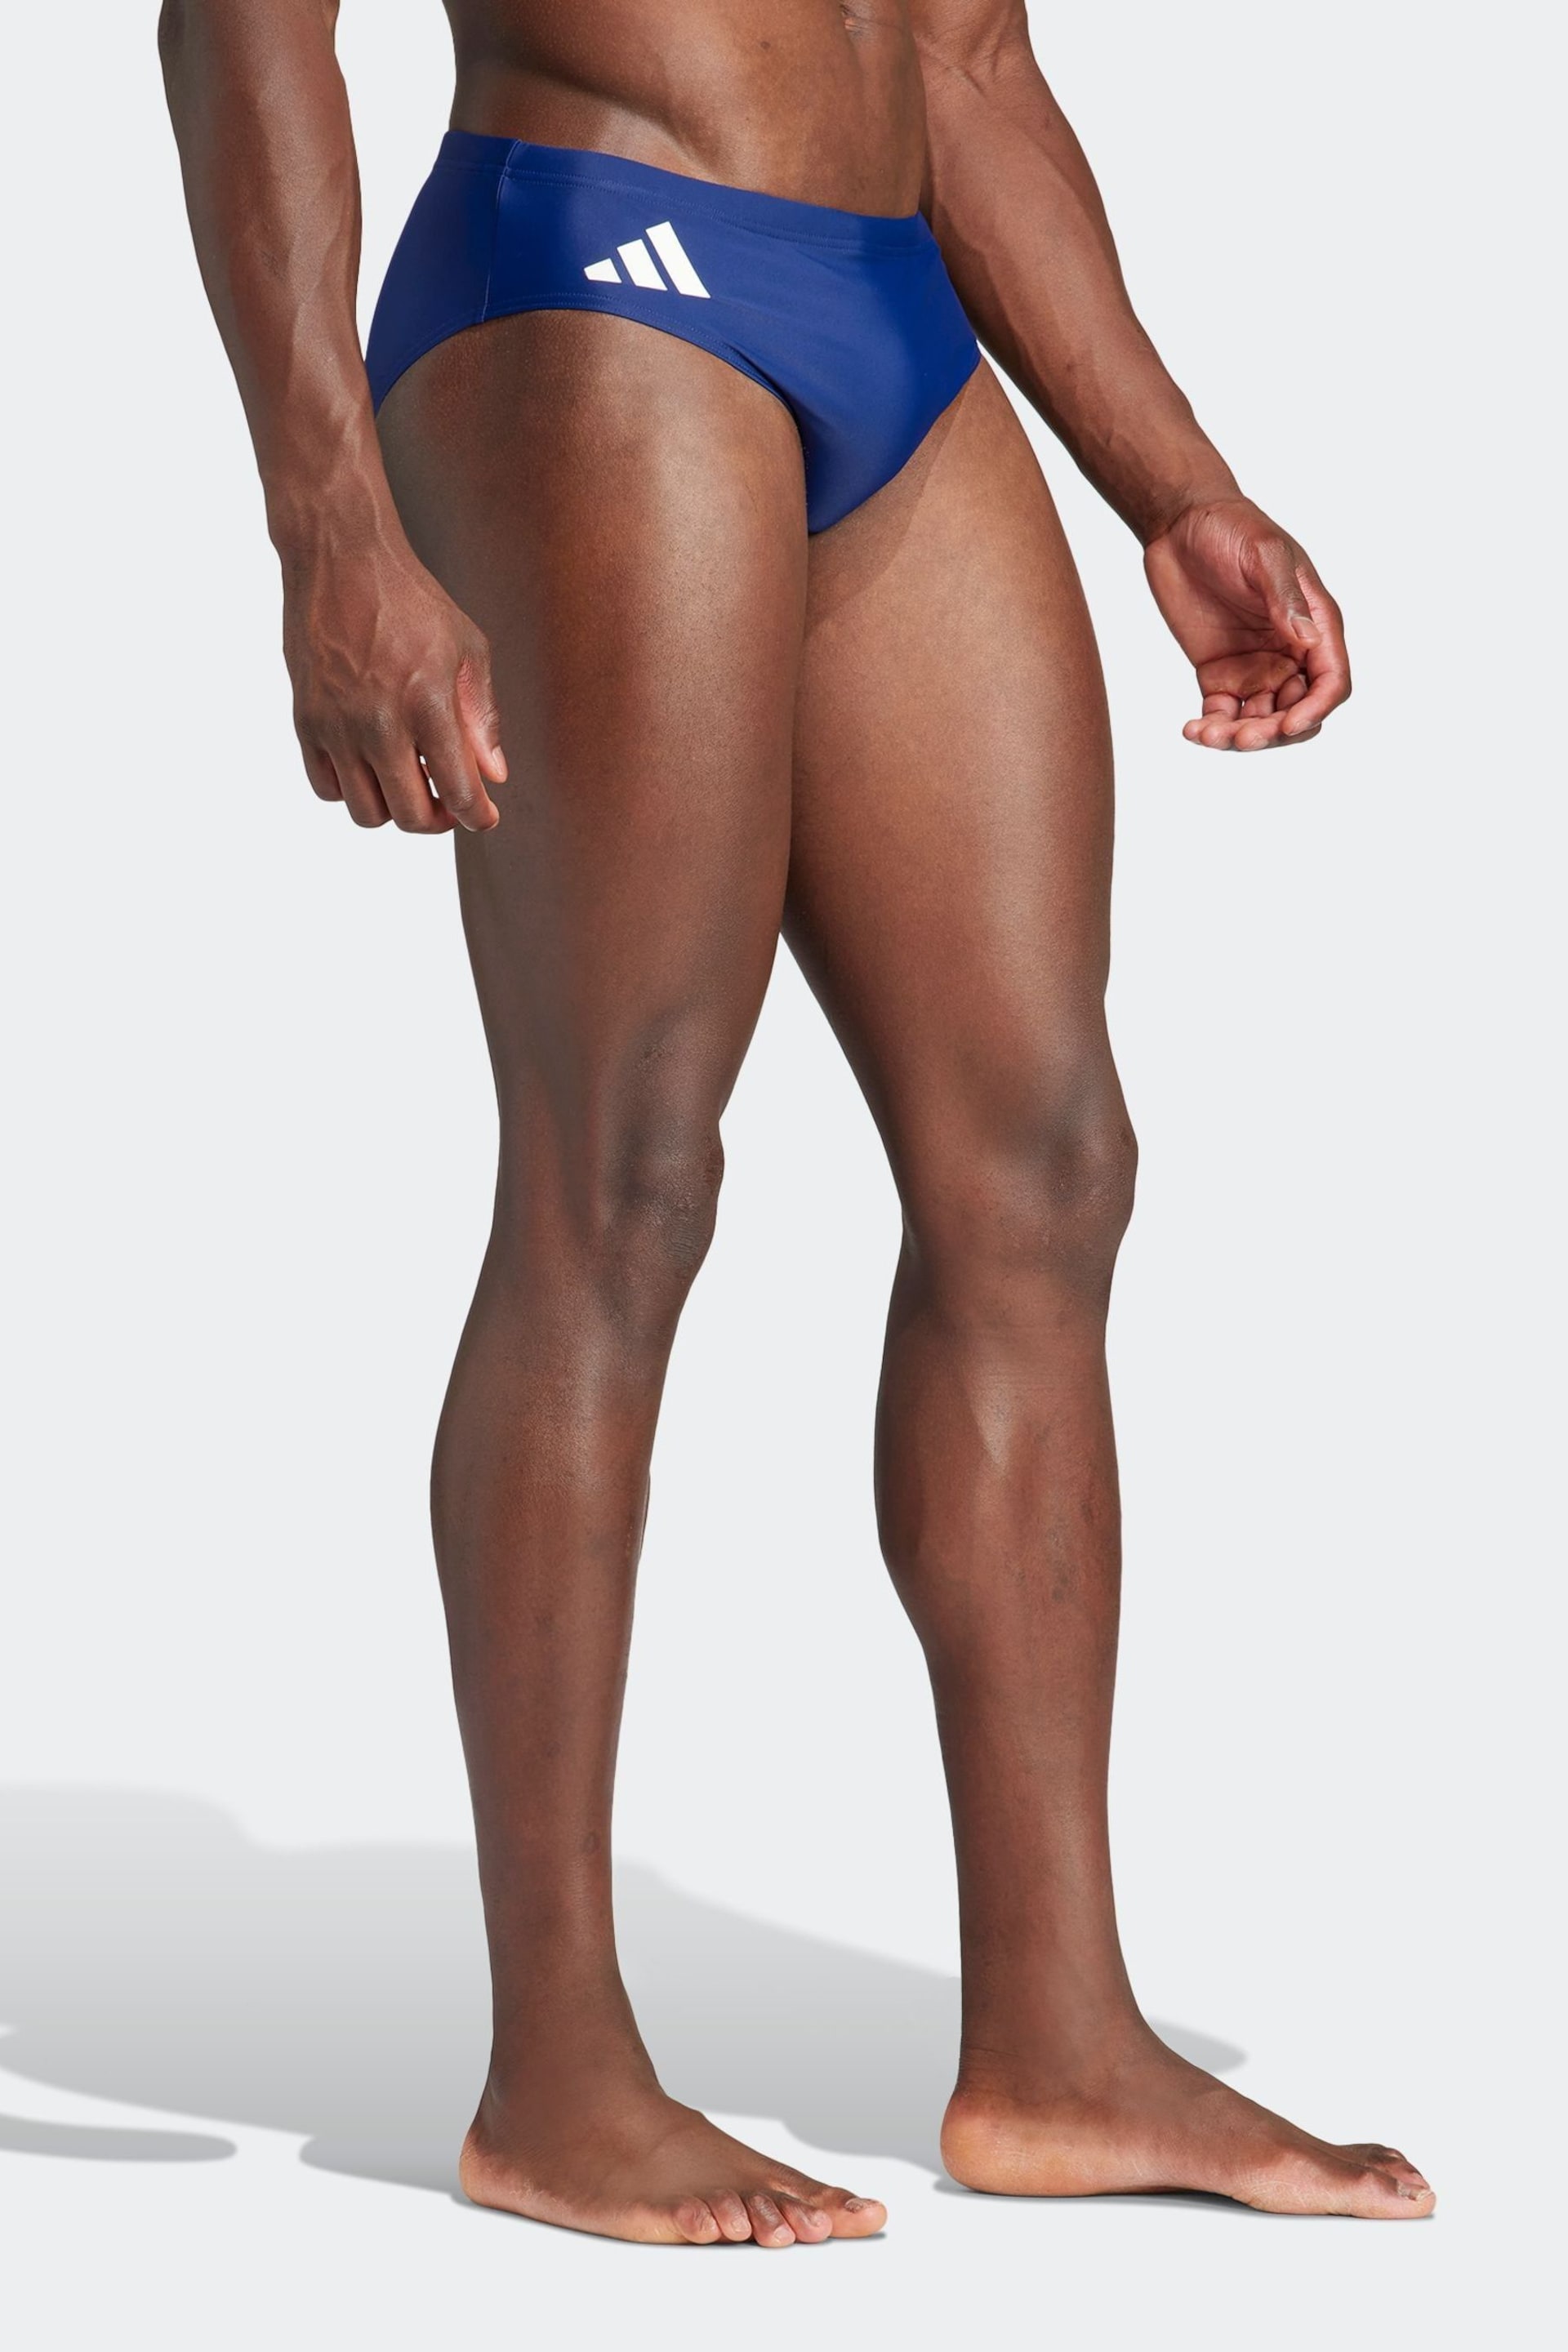 adidas Blue Solid Swim Trunks - Image 3 of 6